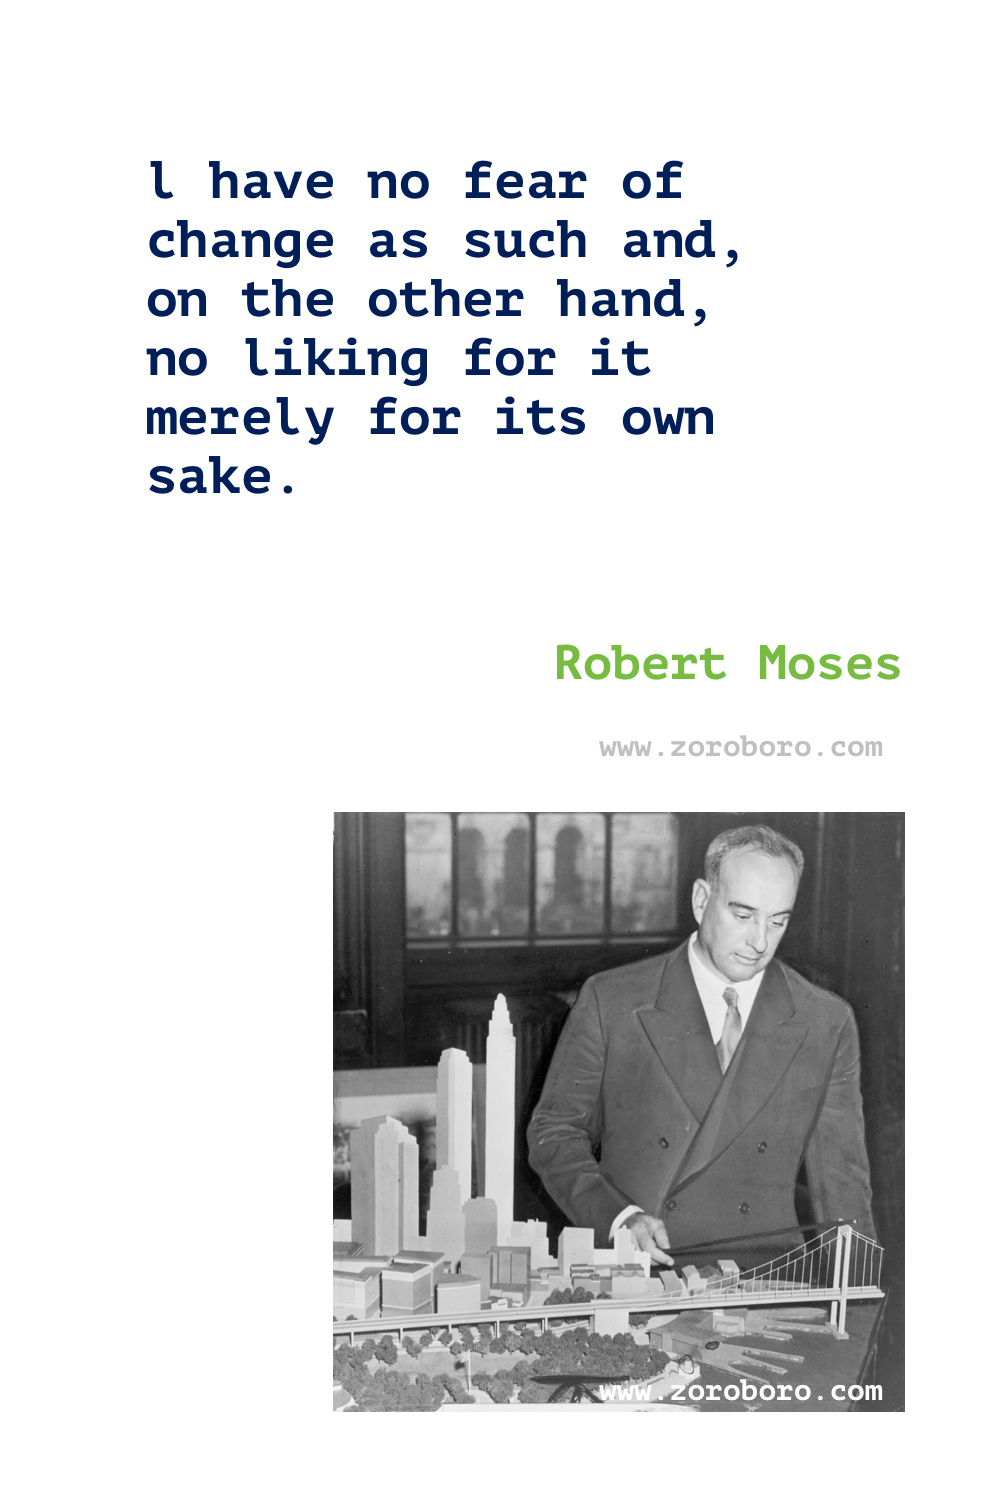 Robert Moses Quotes. Robert Moses Builder. Robert Moses New York / America. Robert Moses